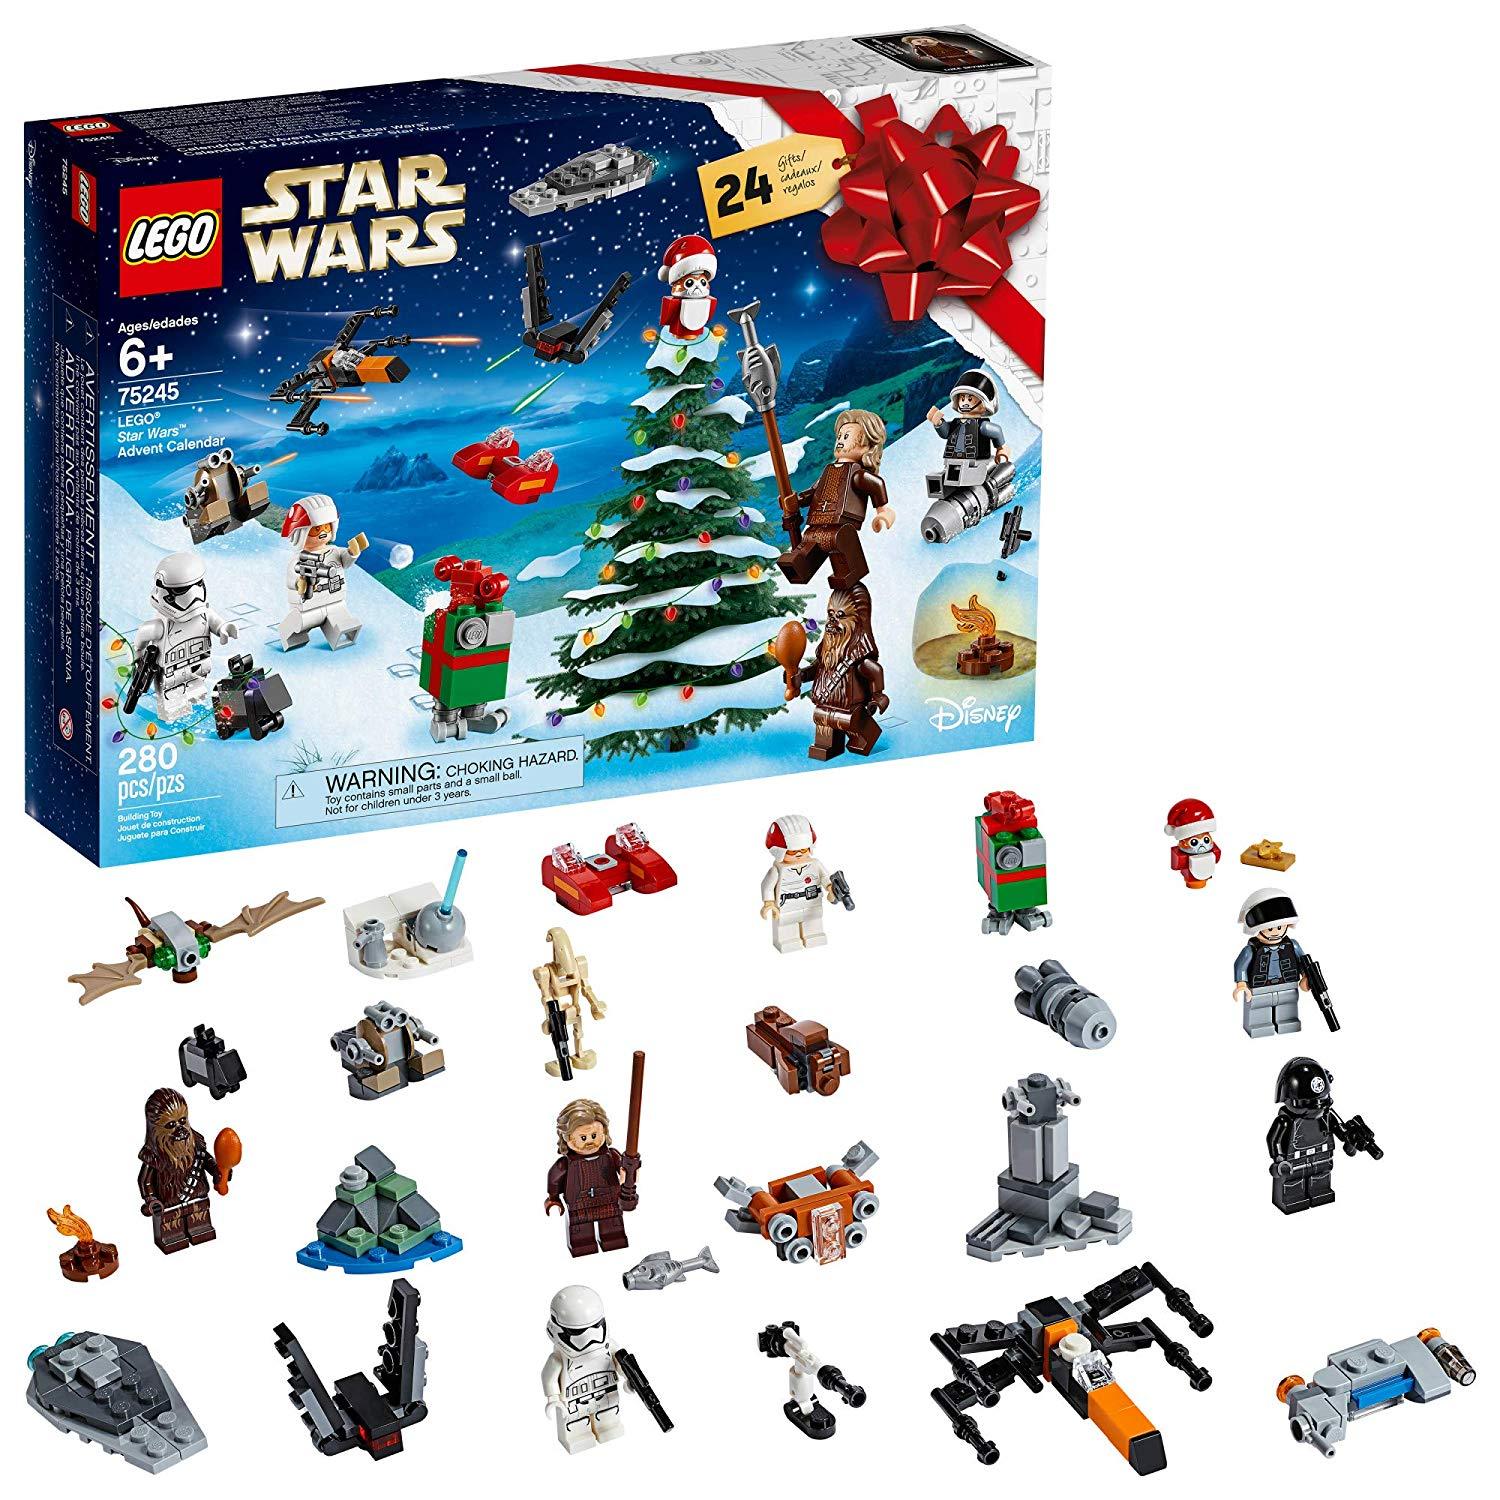 LEGO 75245 Star Wars Advent Calendar Blocks and Bricks